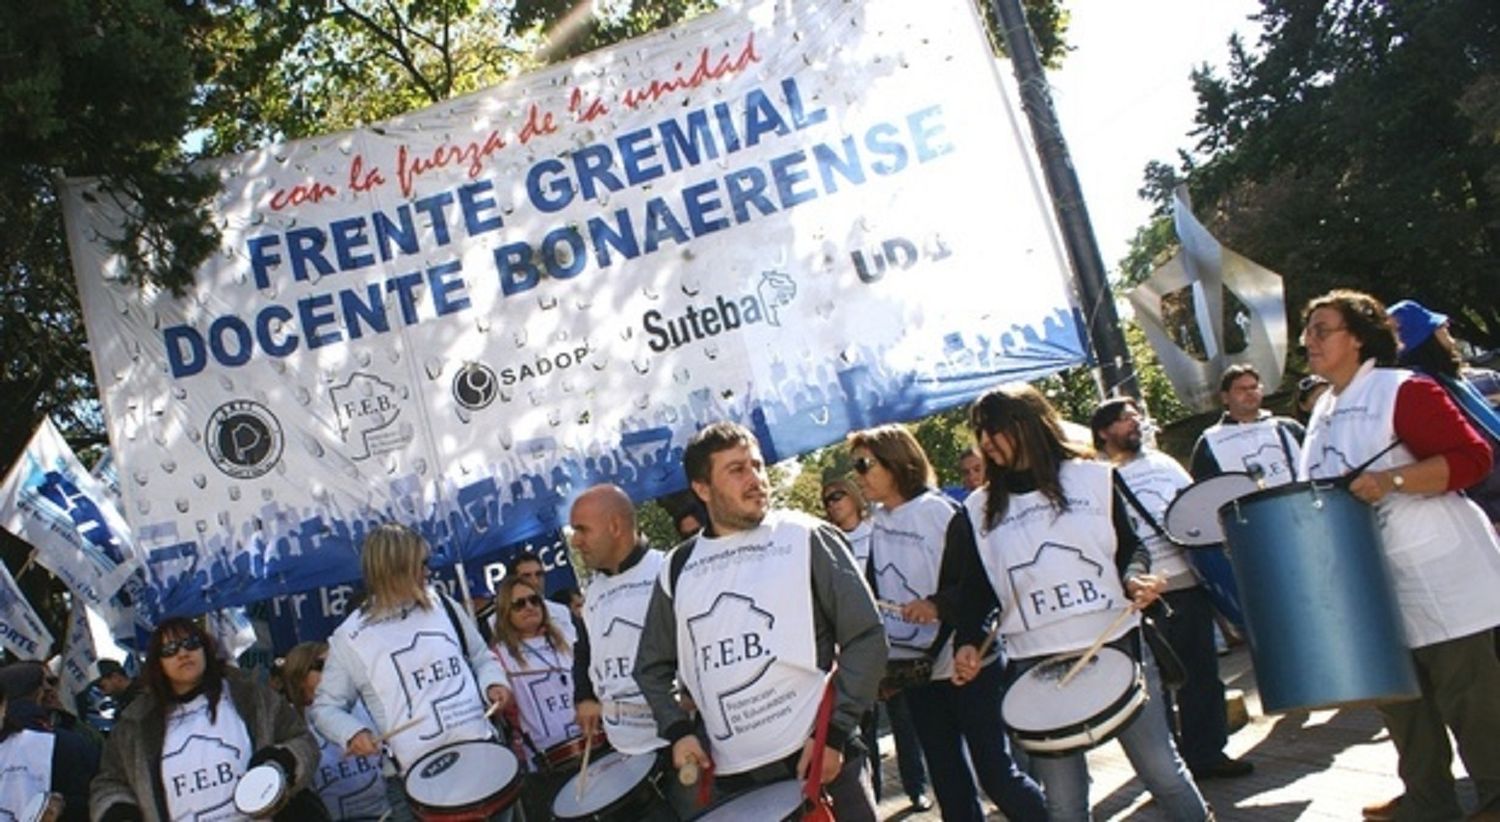 Docentes bonaerenses reclaman a Vidal  "una urgente reunión" para discutir las paritarias